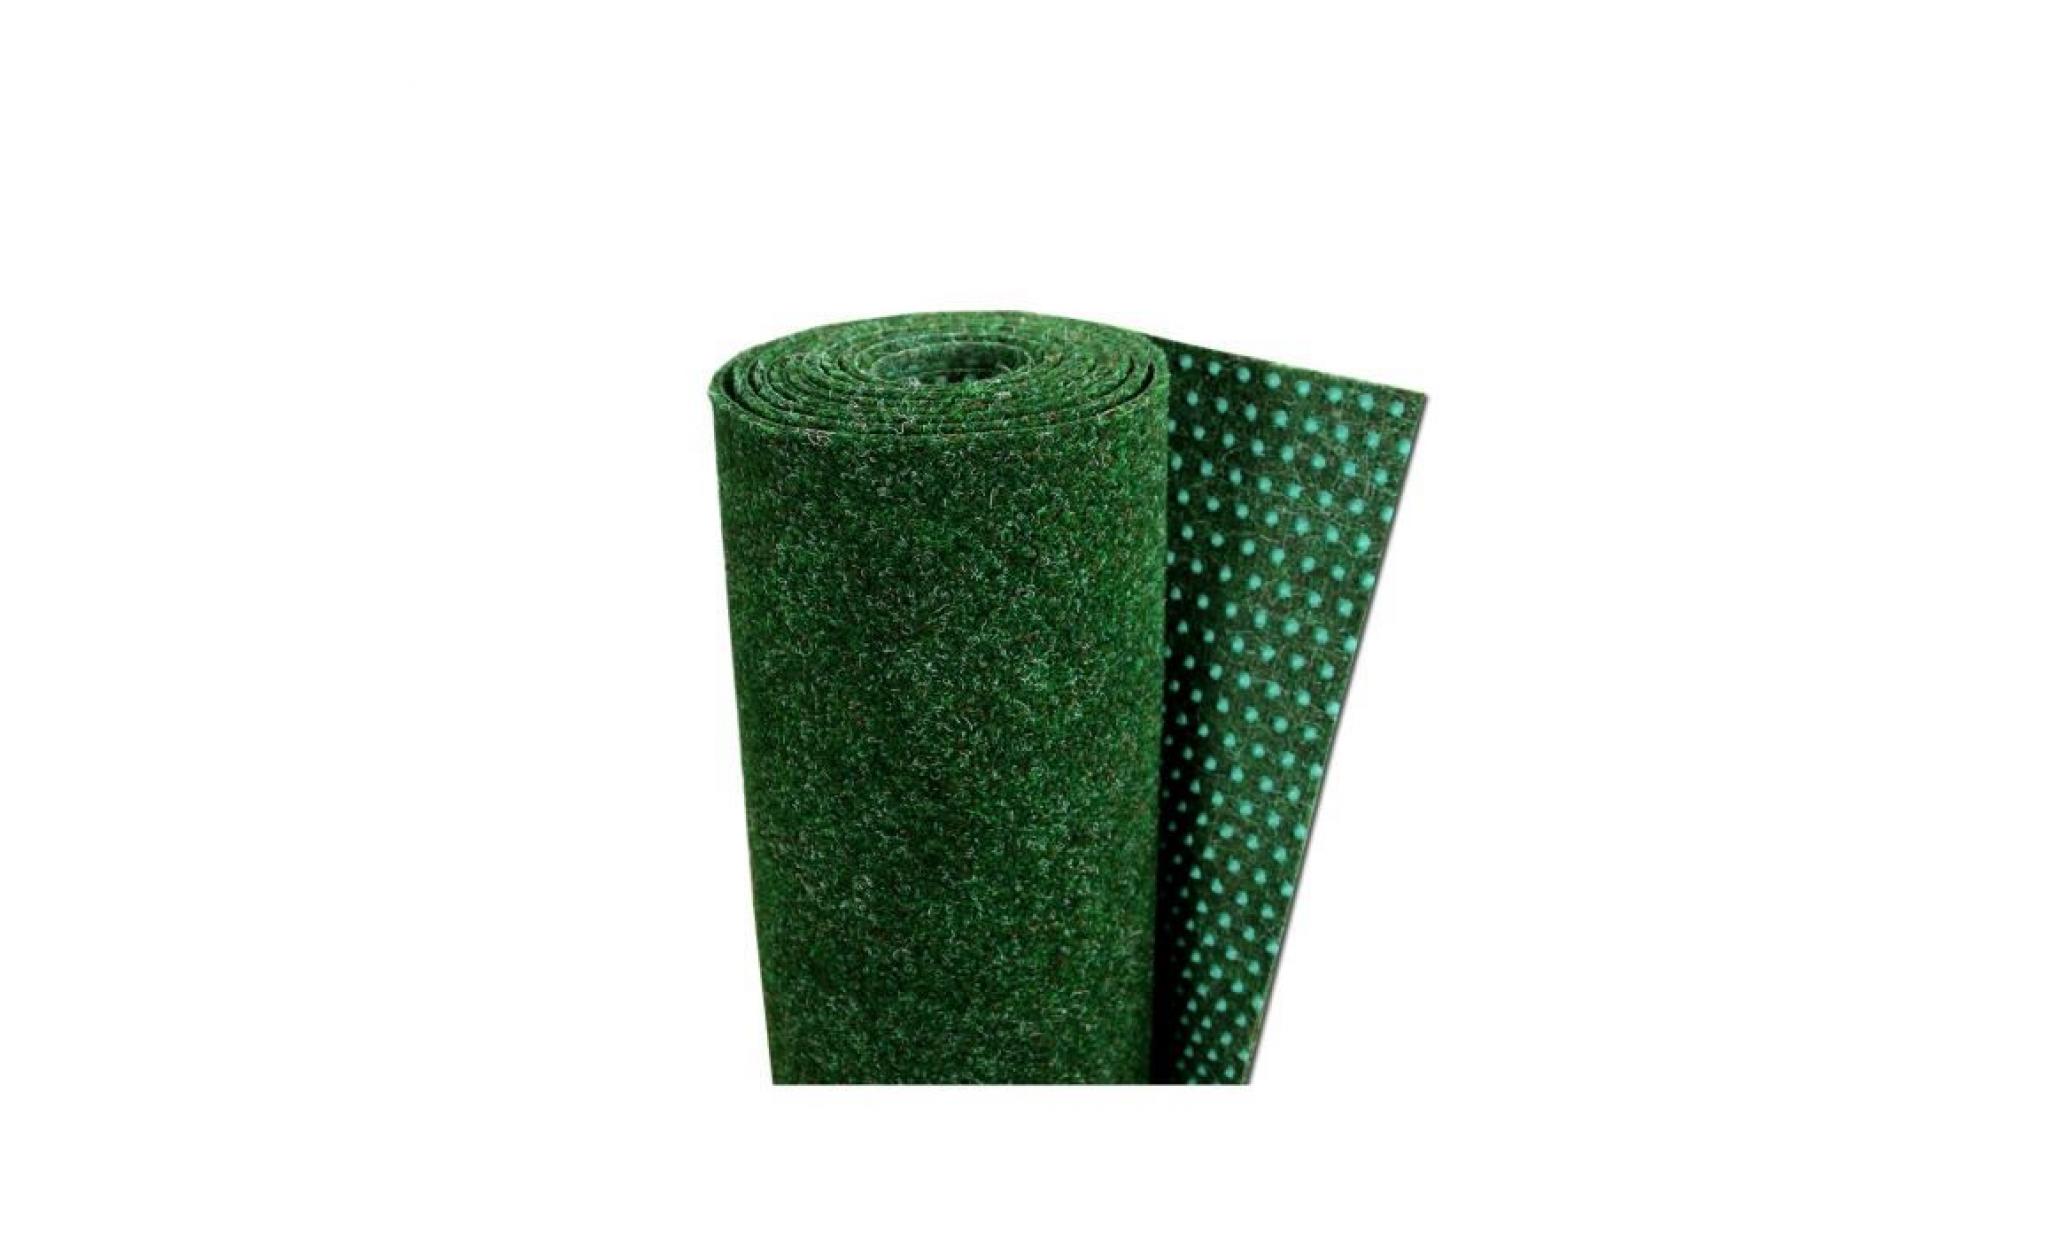 kingston   tapis type gazon artificiel – pour jardin, terrasse, balcon   anthracite [200x300 cm] pas cher